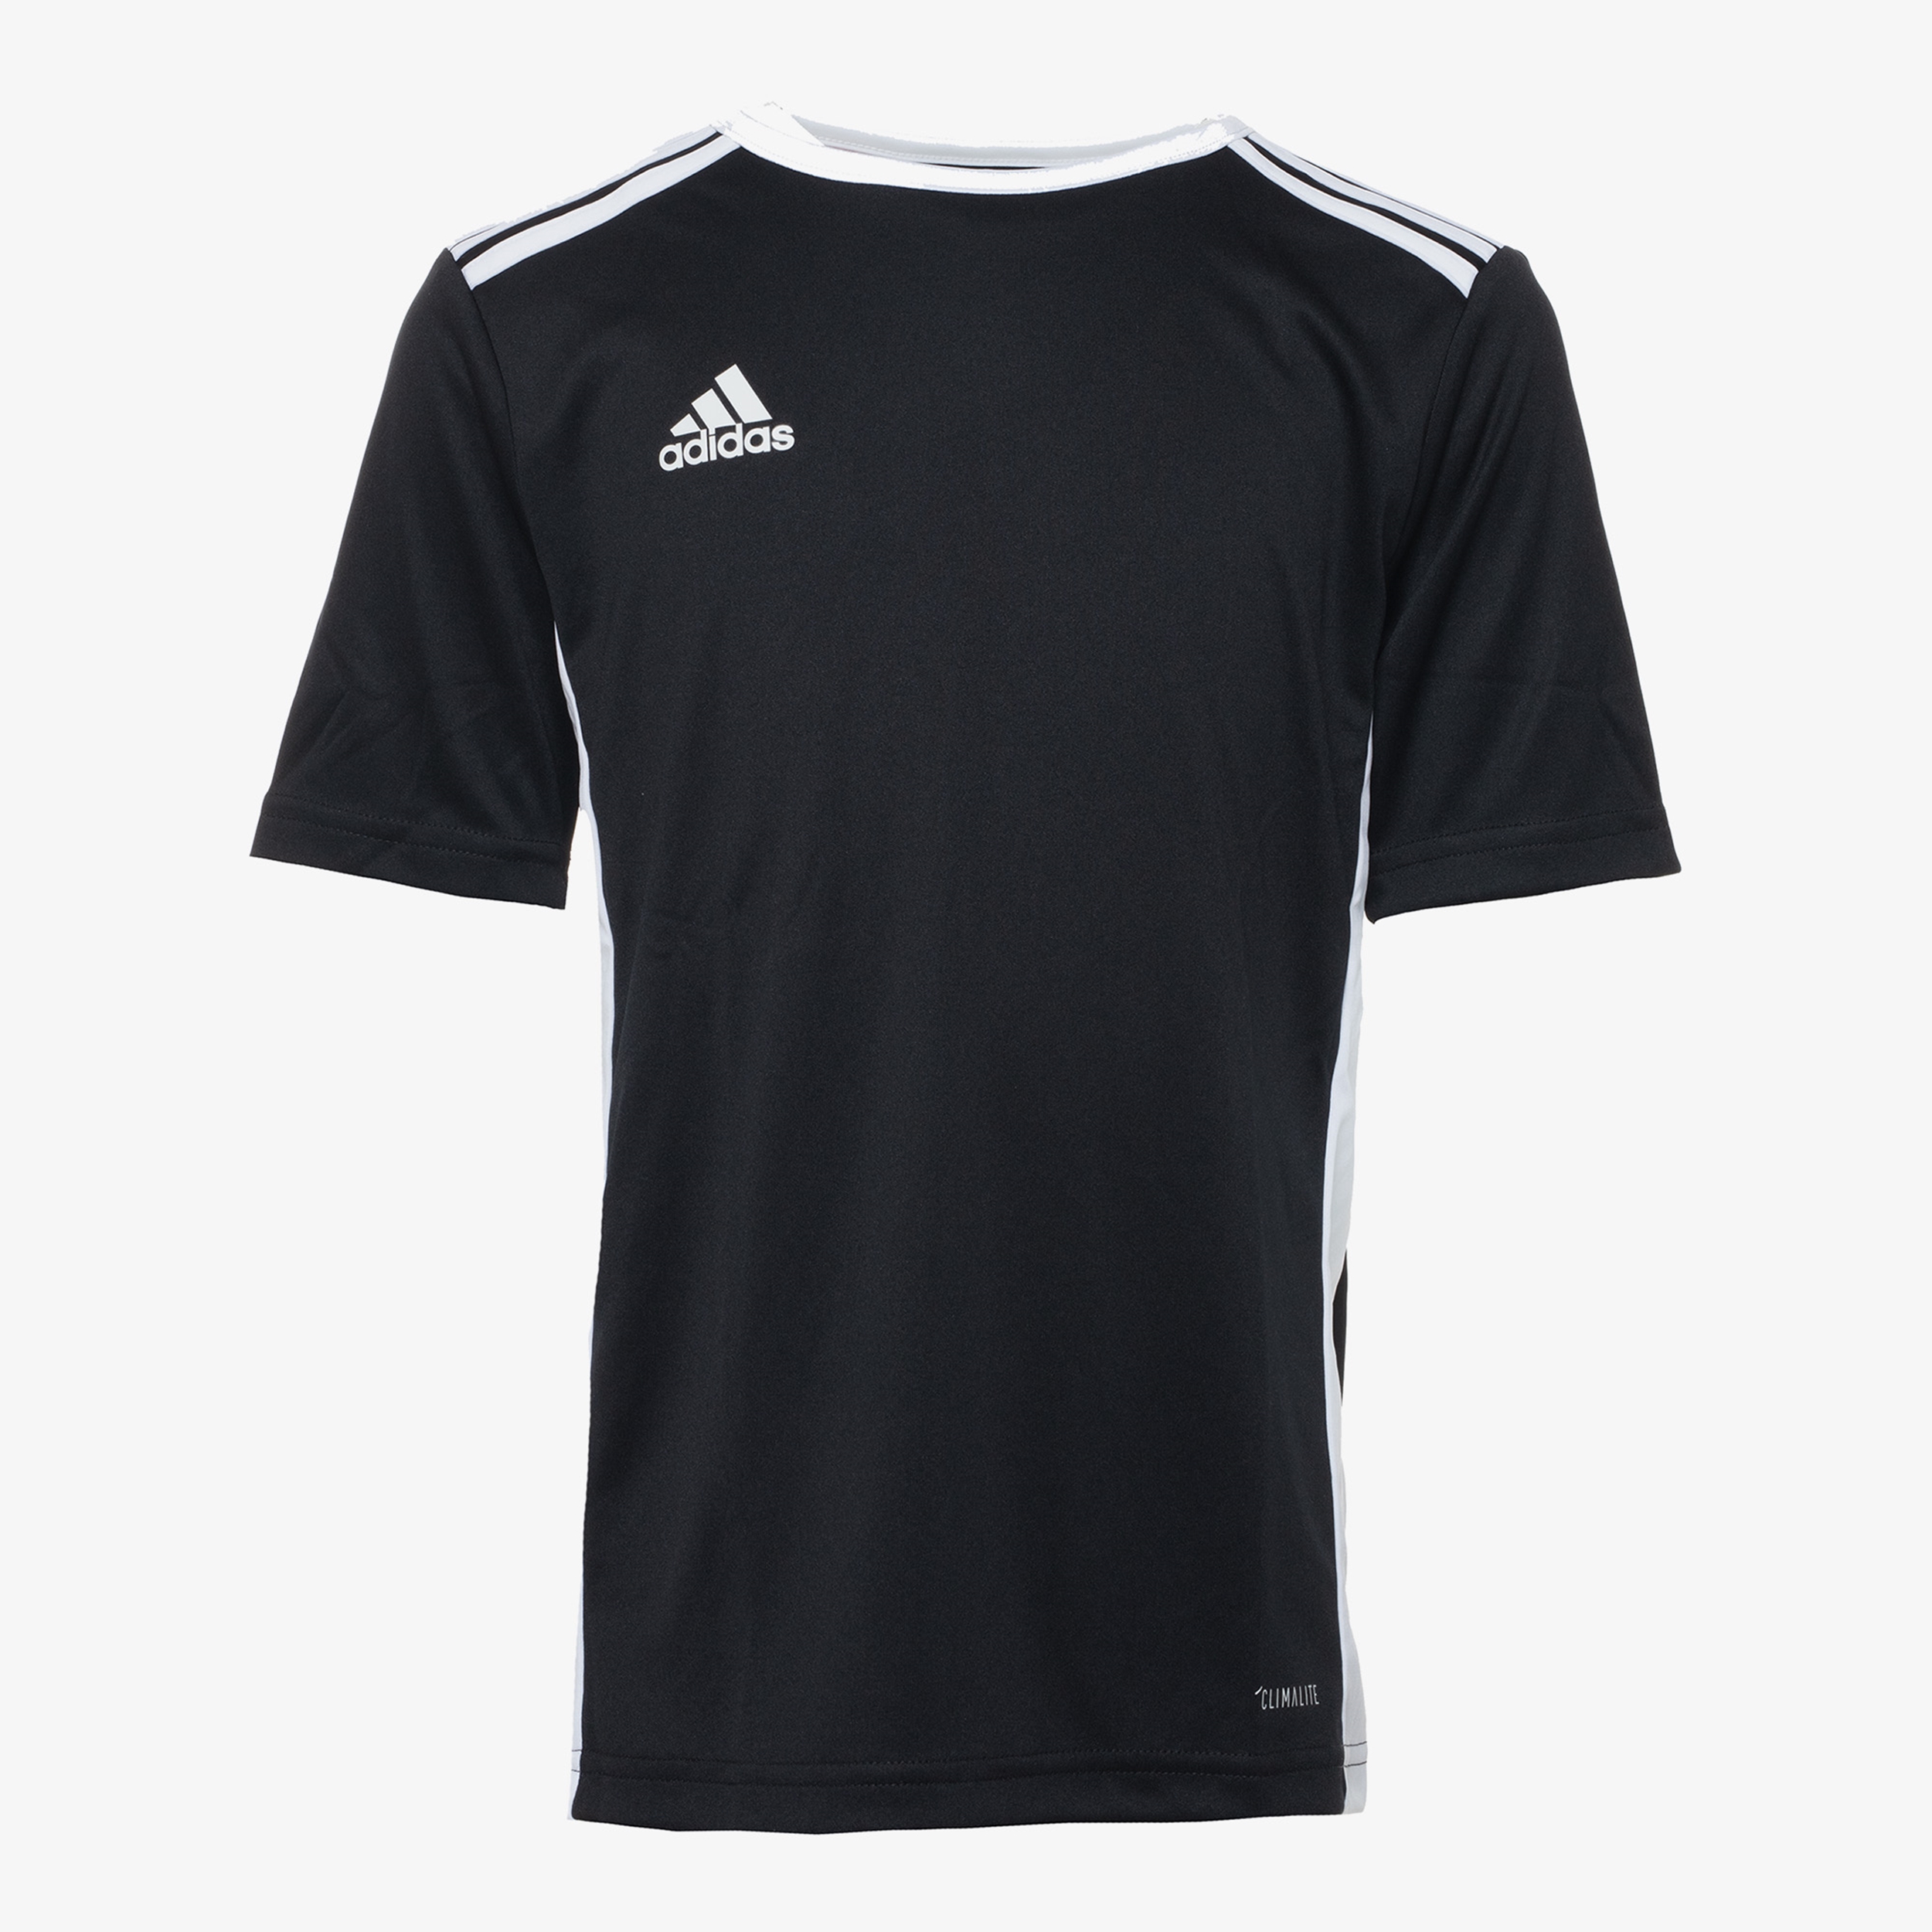 Adidas Entrada kinder sport t-shirt online bestellen | Scapino